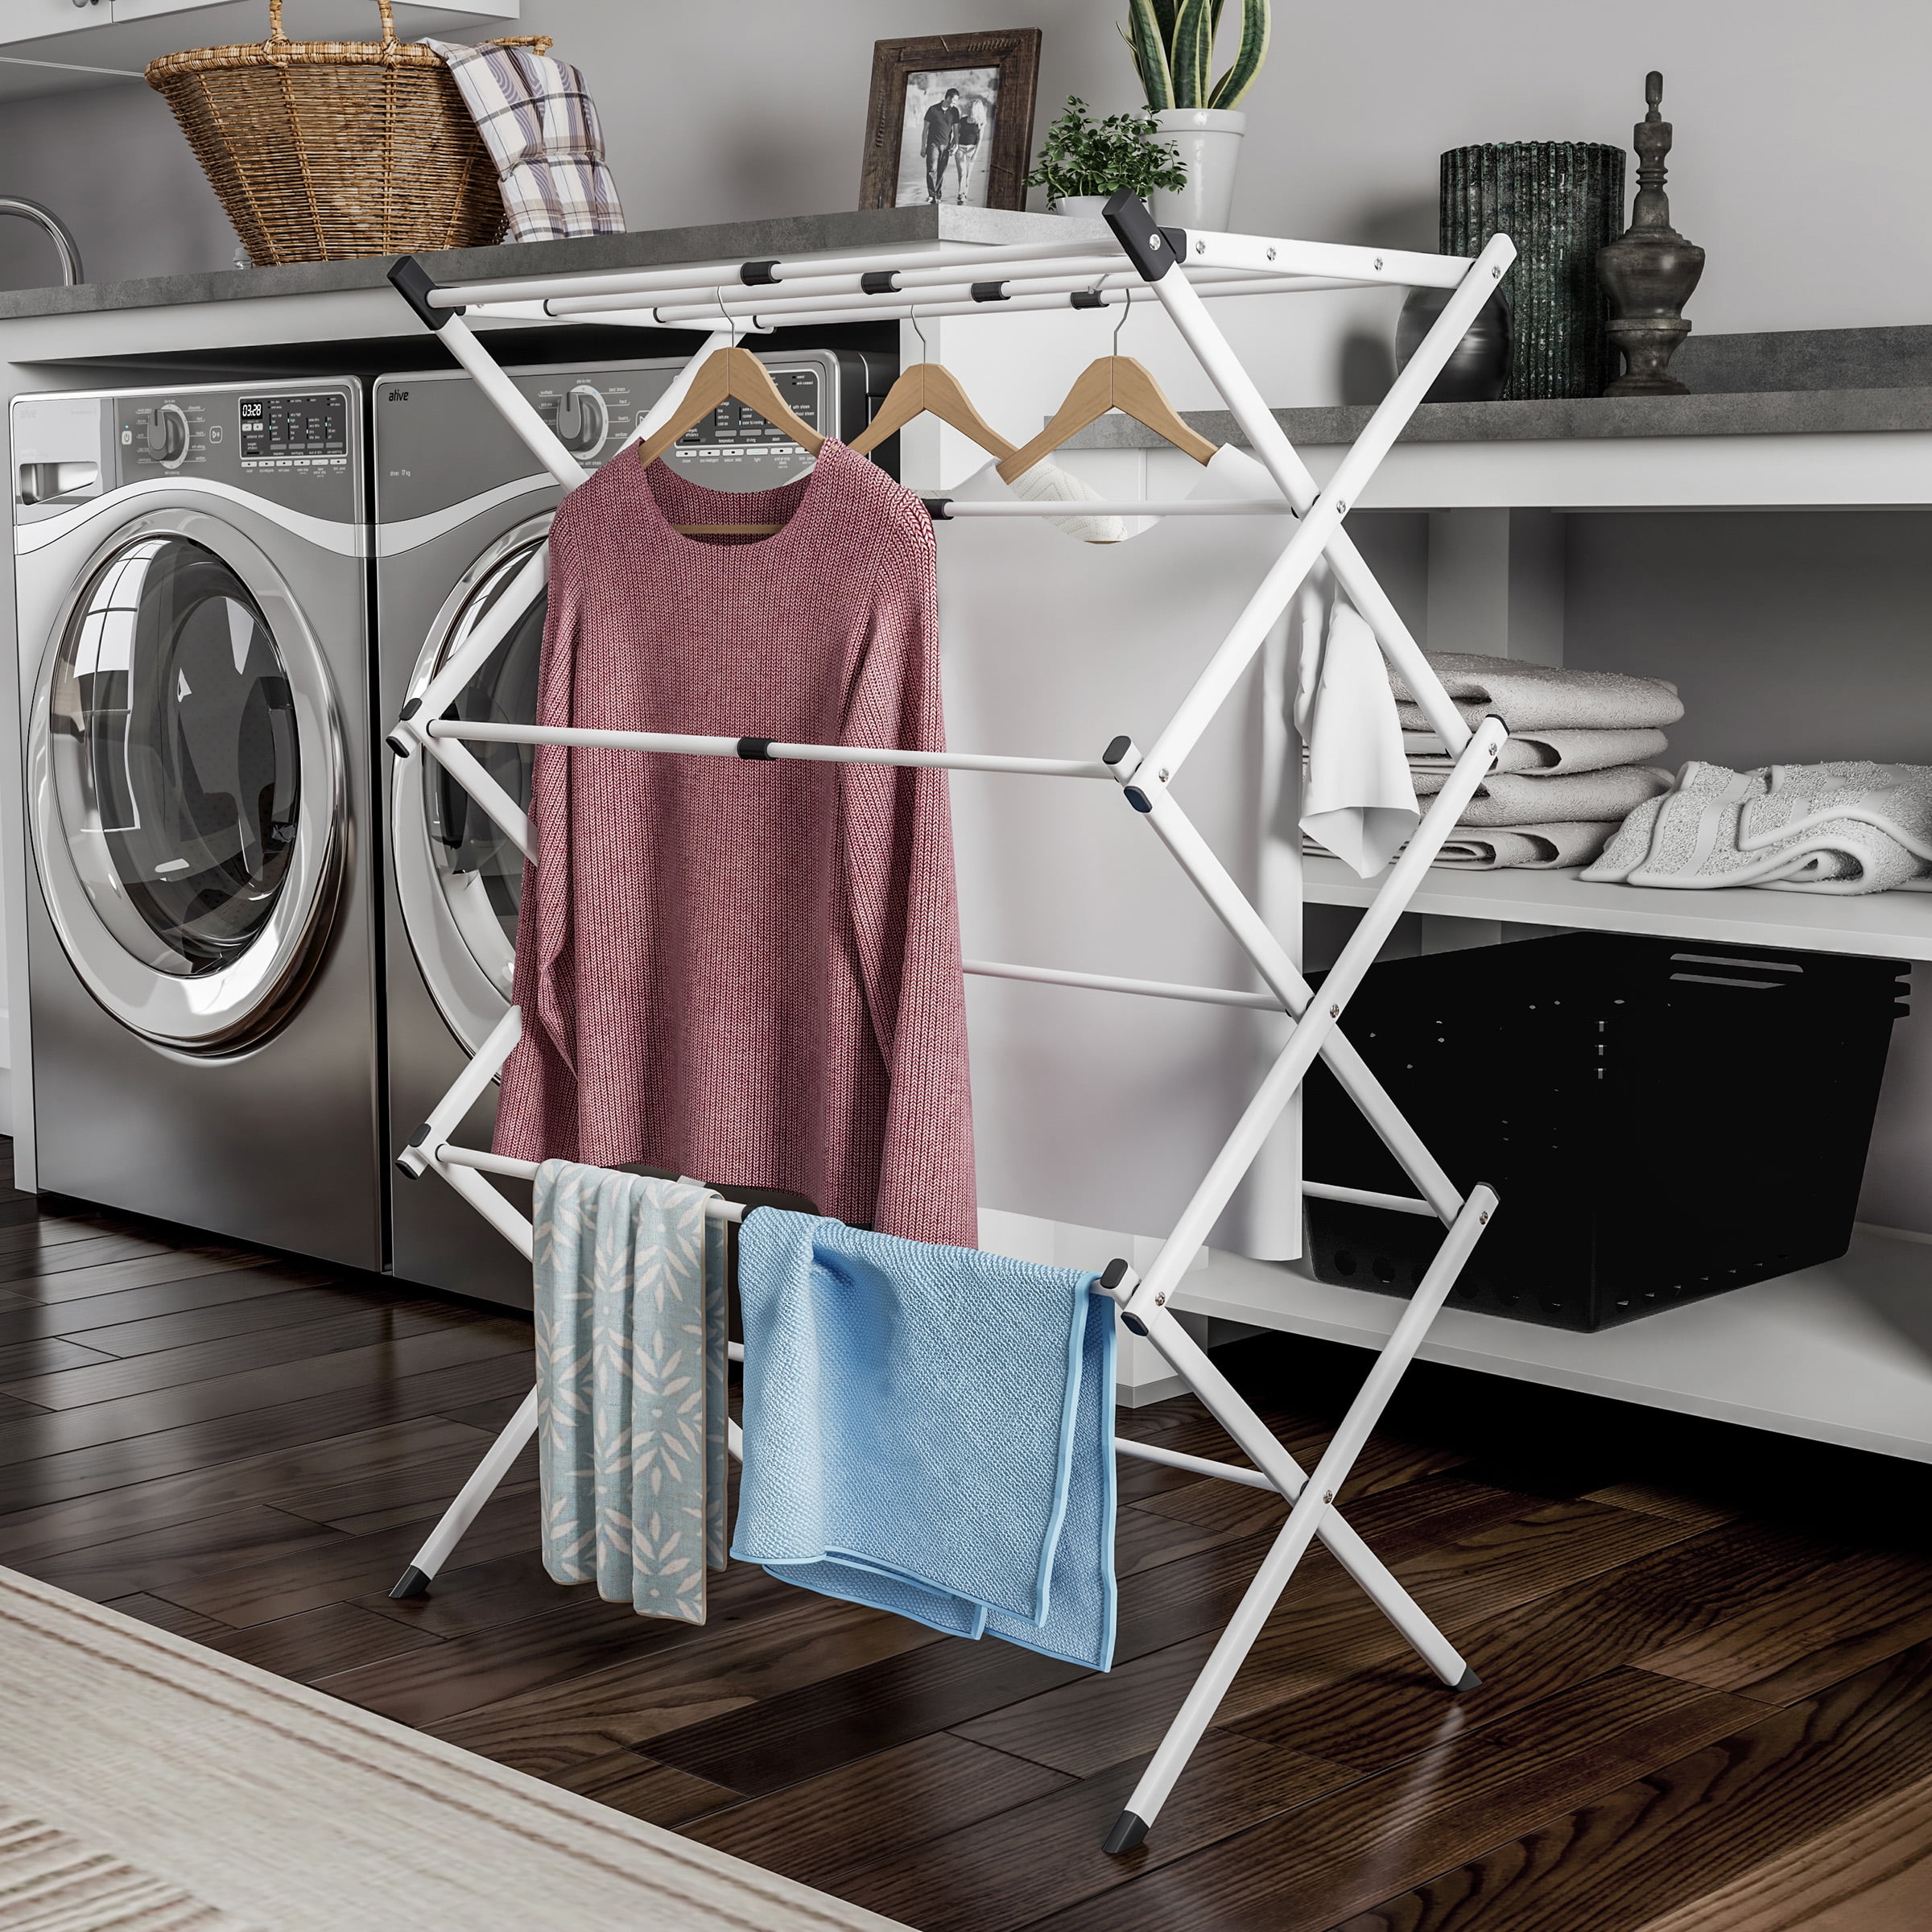 laundry drying rack